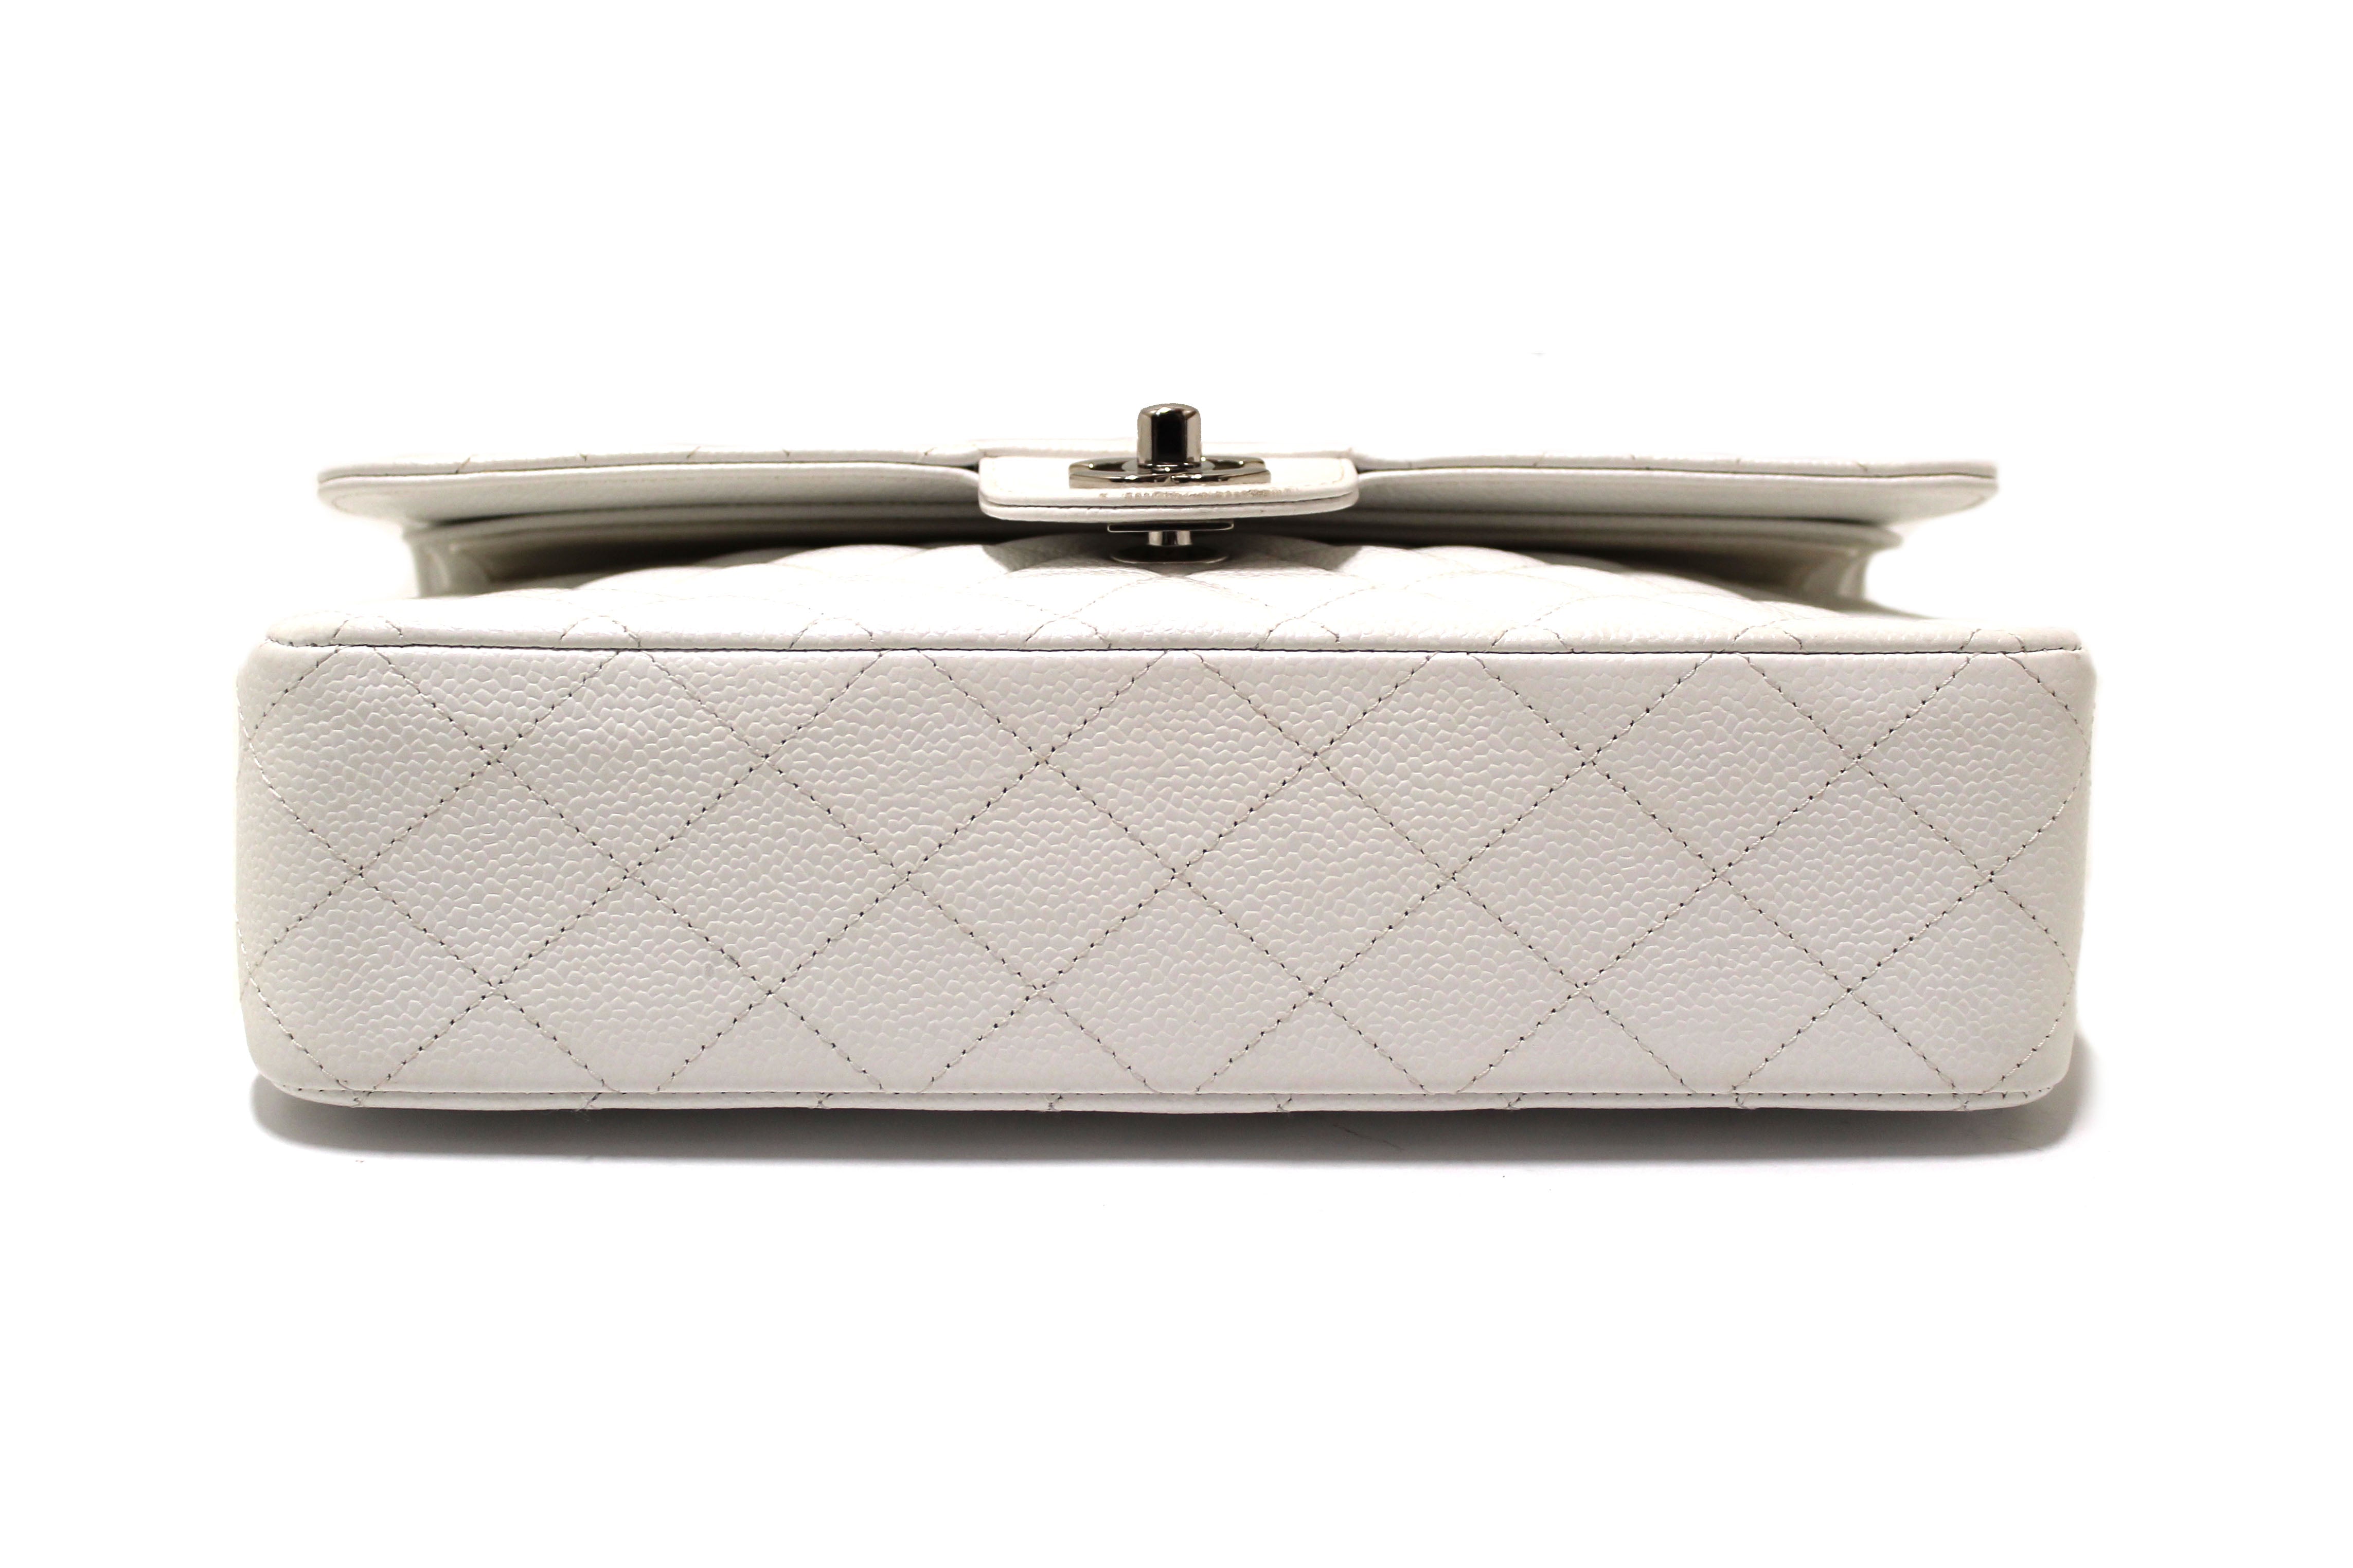 Authentic Chanel White Caviar Leather Medium Classic Flap Chain Handbag